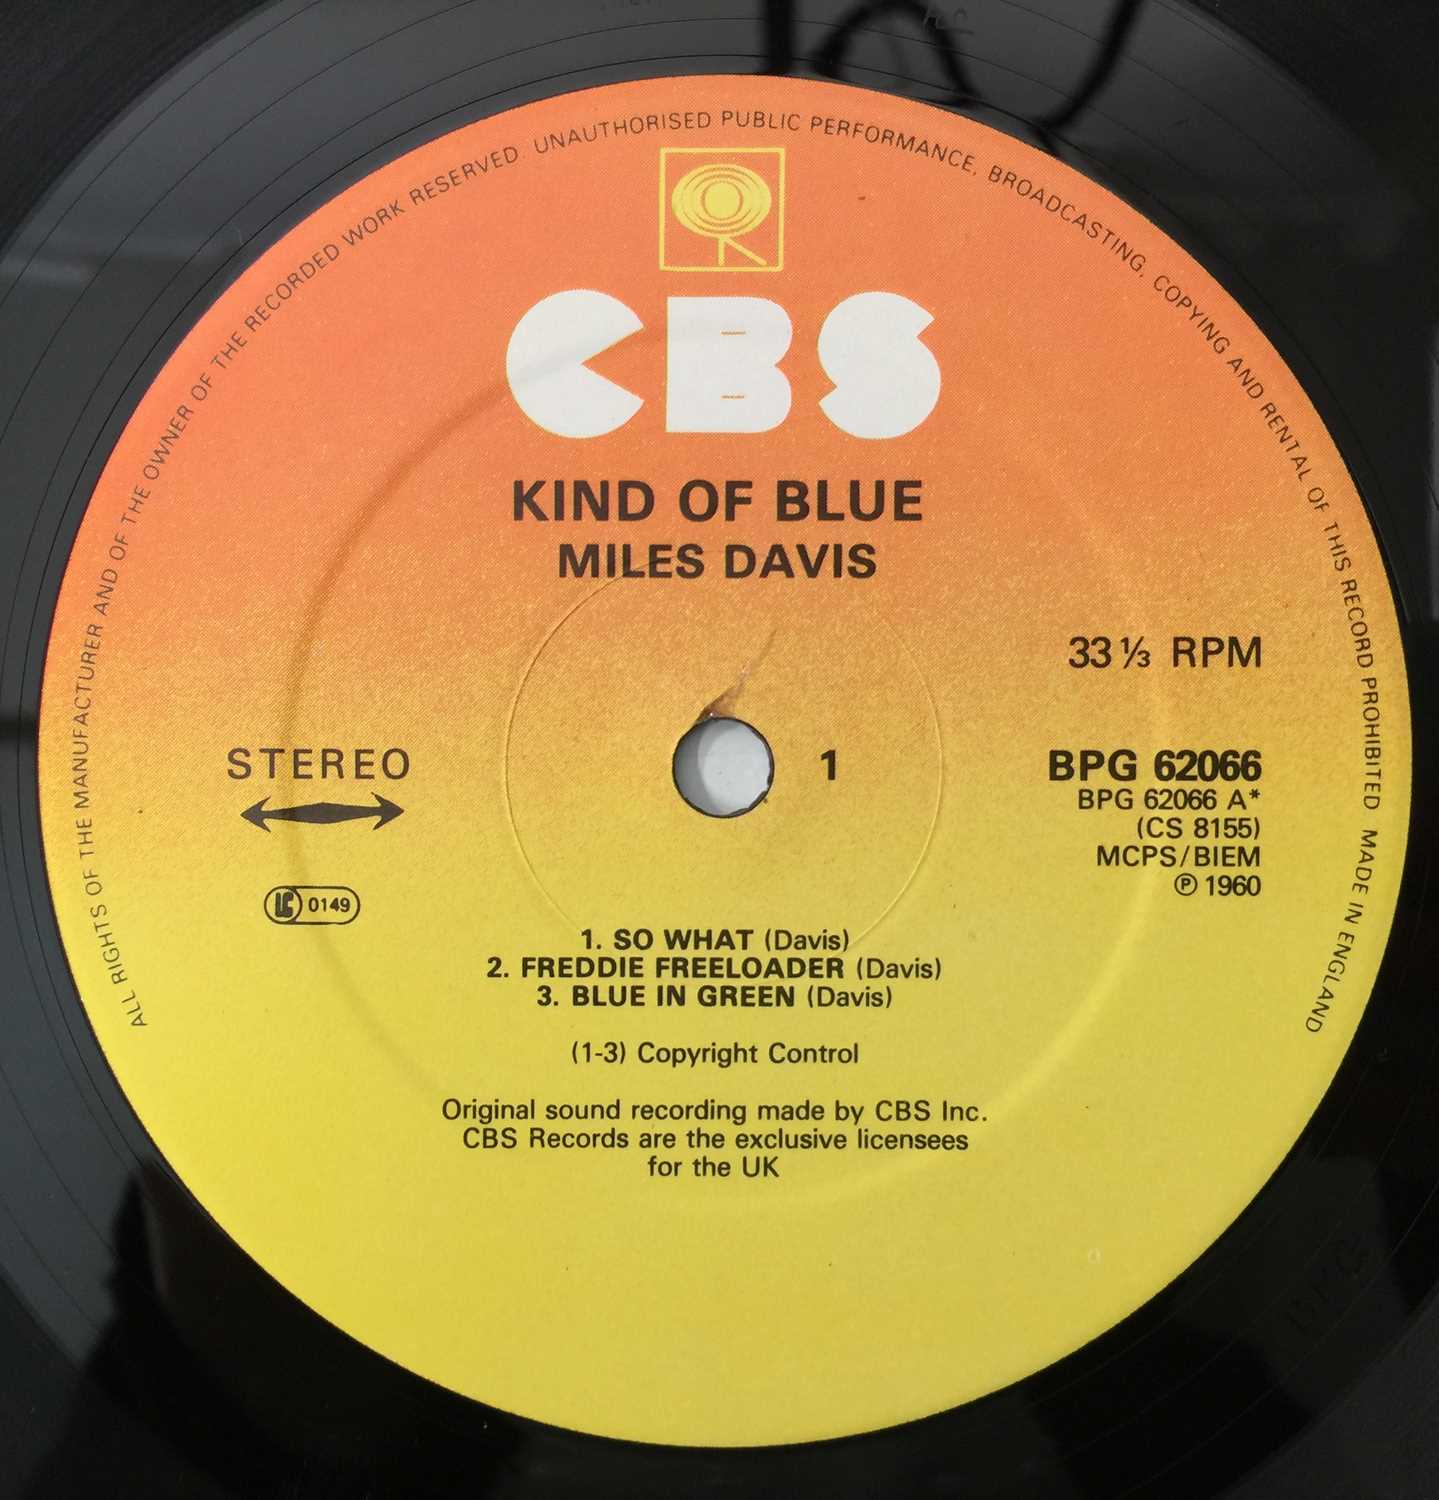 MILES DAVIS - KIND OF BLUE LP (CBS BPG 62066 - NIMBUS PRESSING) - Image 4 of 5